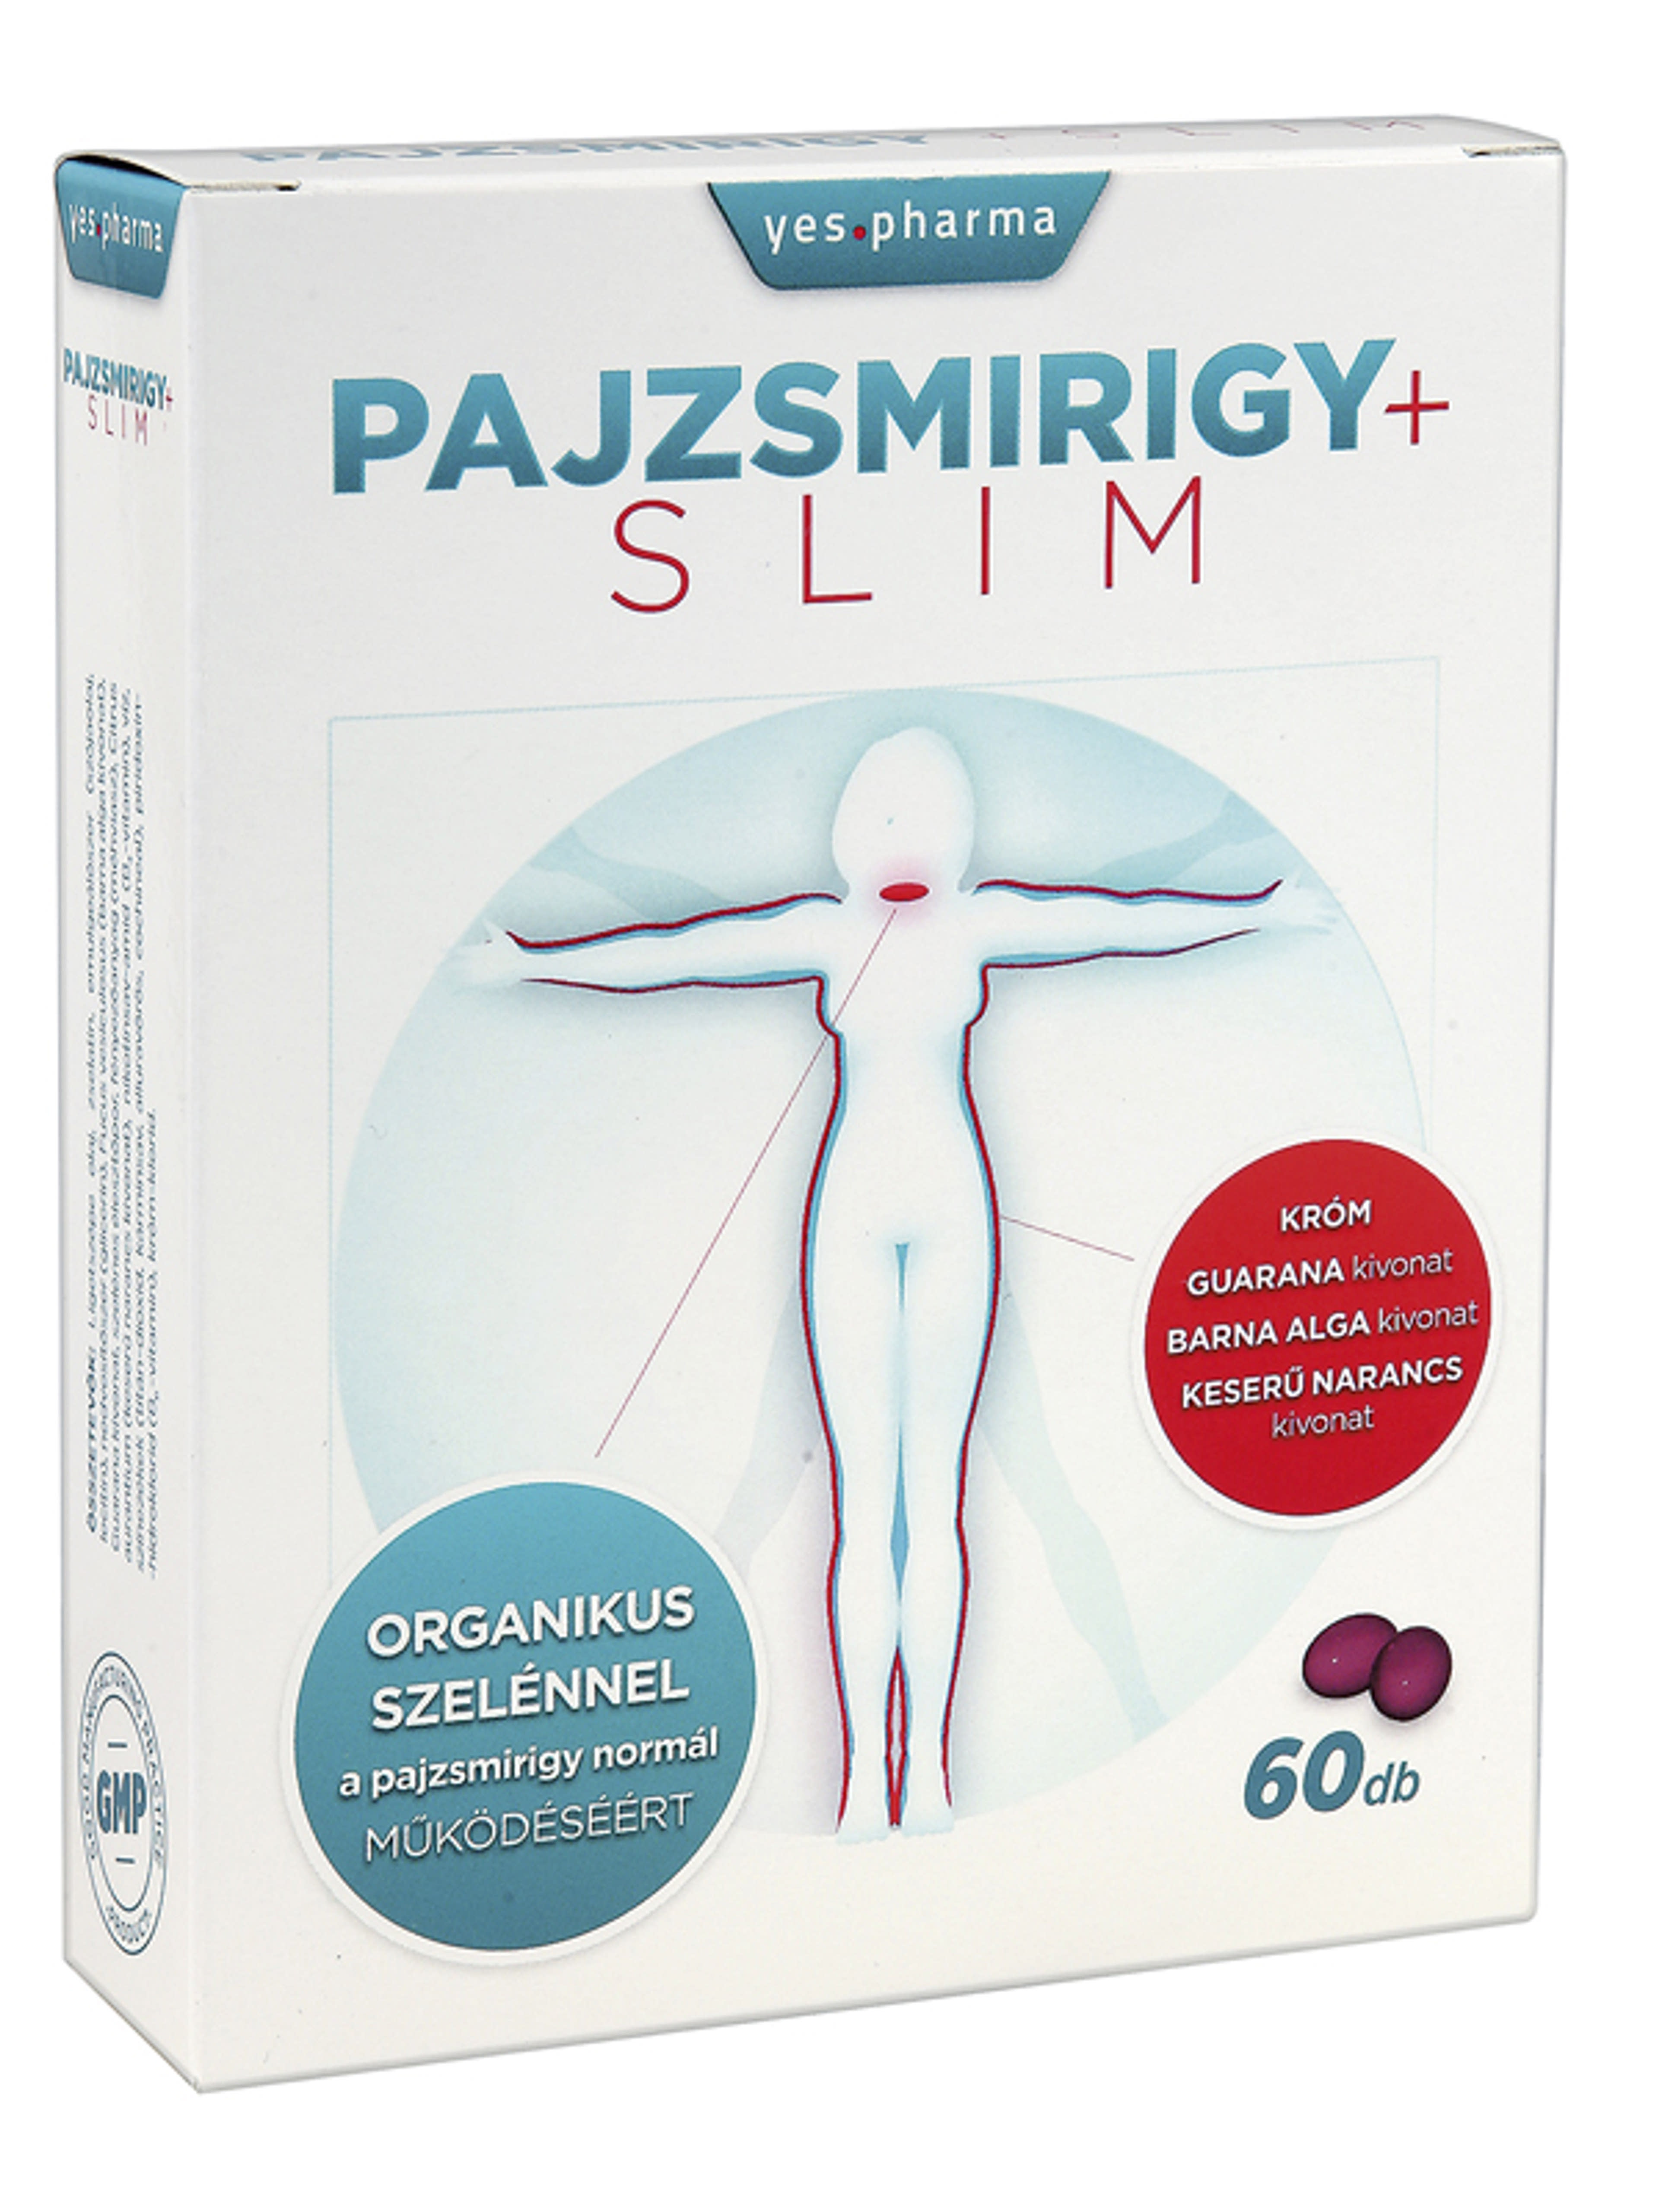 Yes Pharma Pajzsmirigy+ Slim Kapszula - 60 db